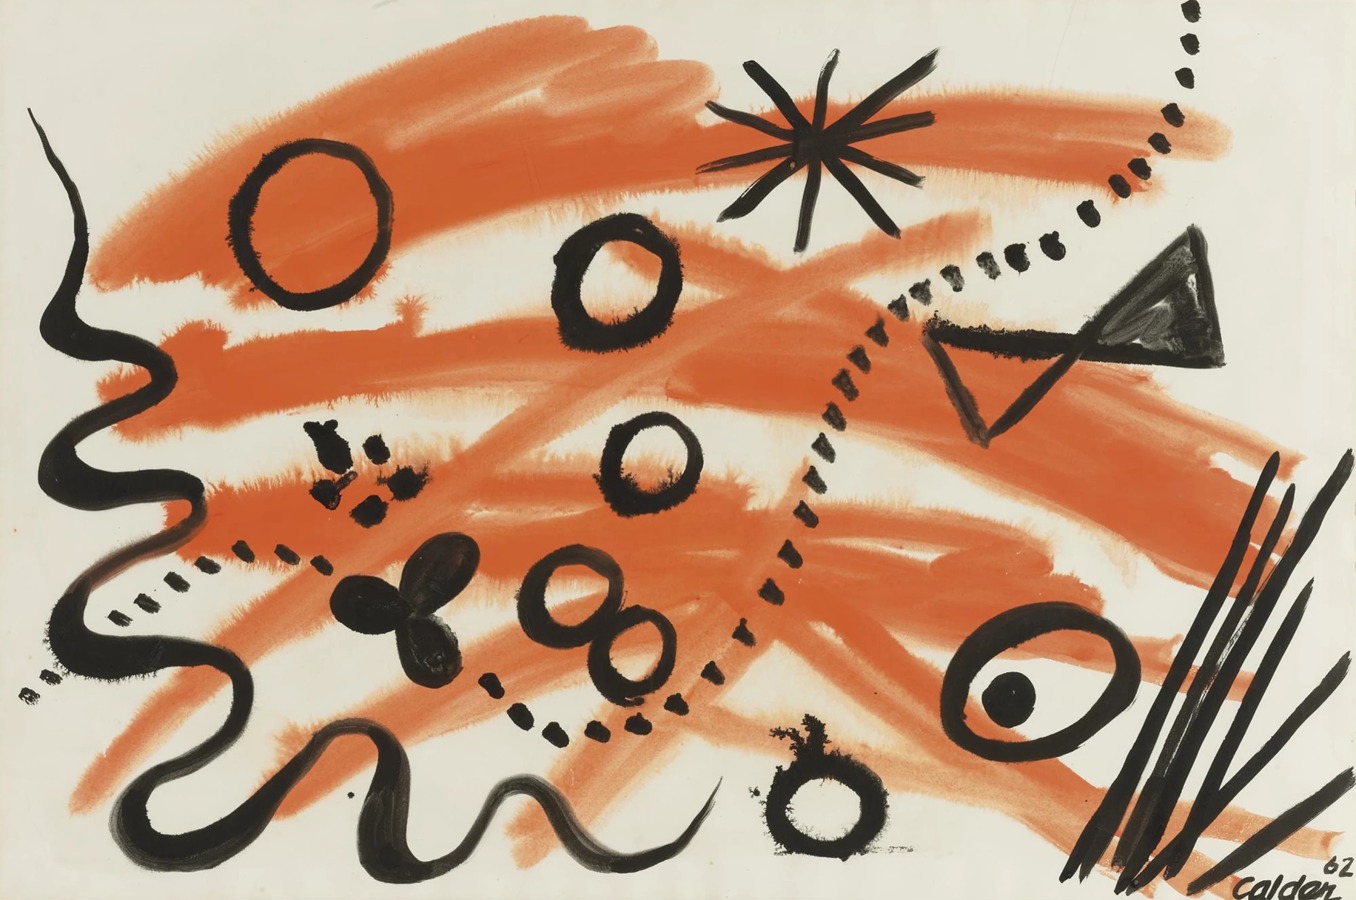 Alexander Calder - Arrangements in Orange and Black